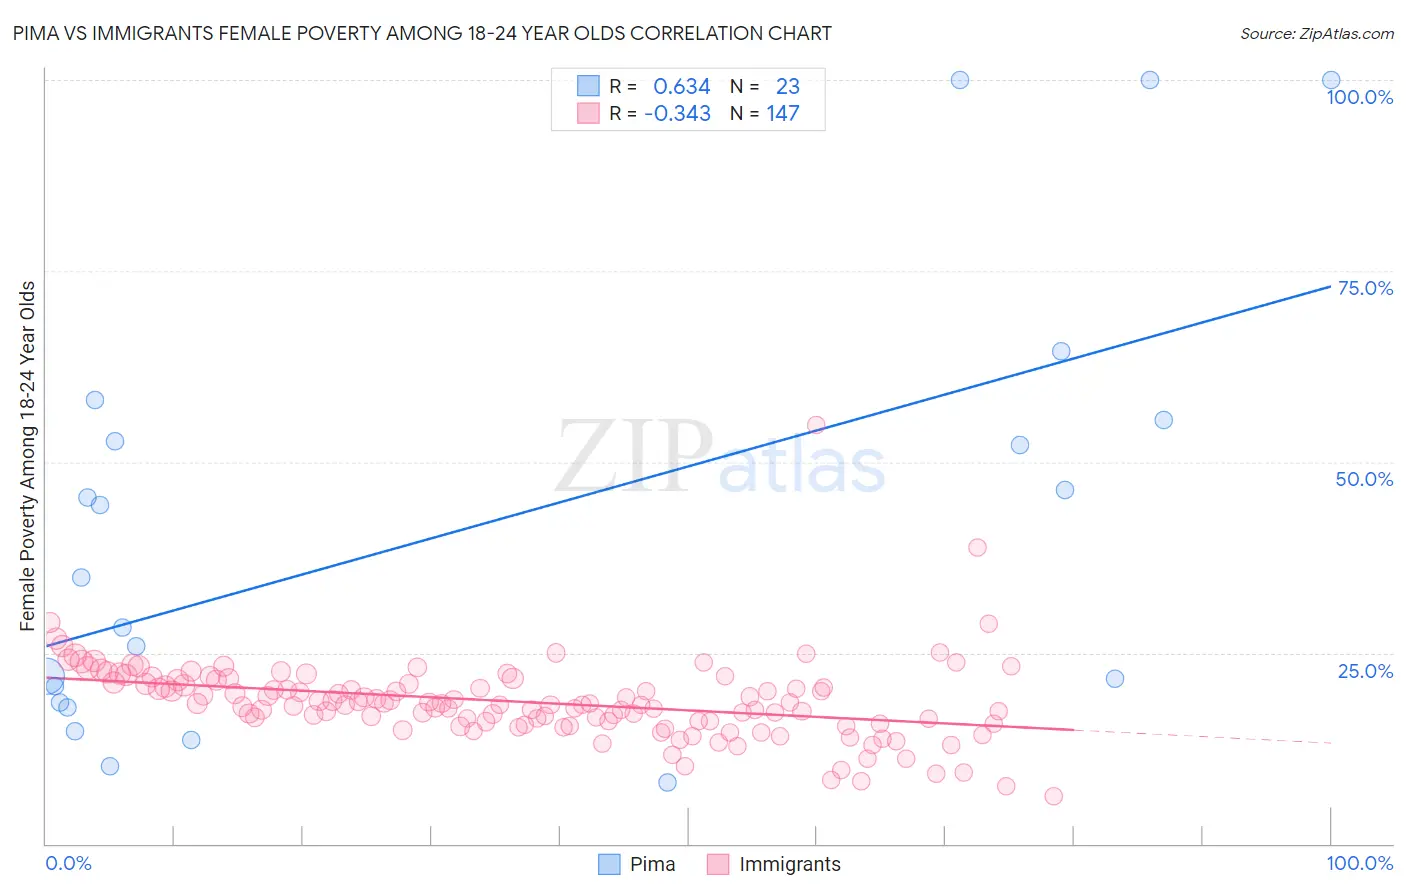 Pima vs Immigrants Female Poverty Among 18-24 Year Olds